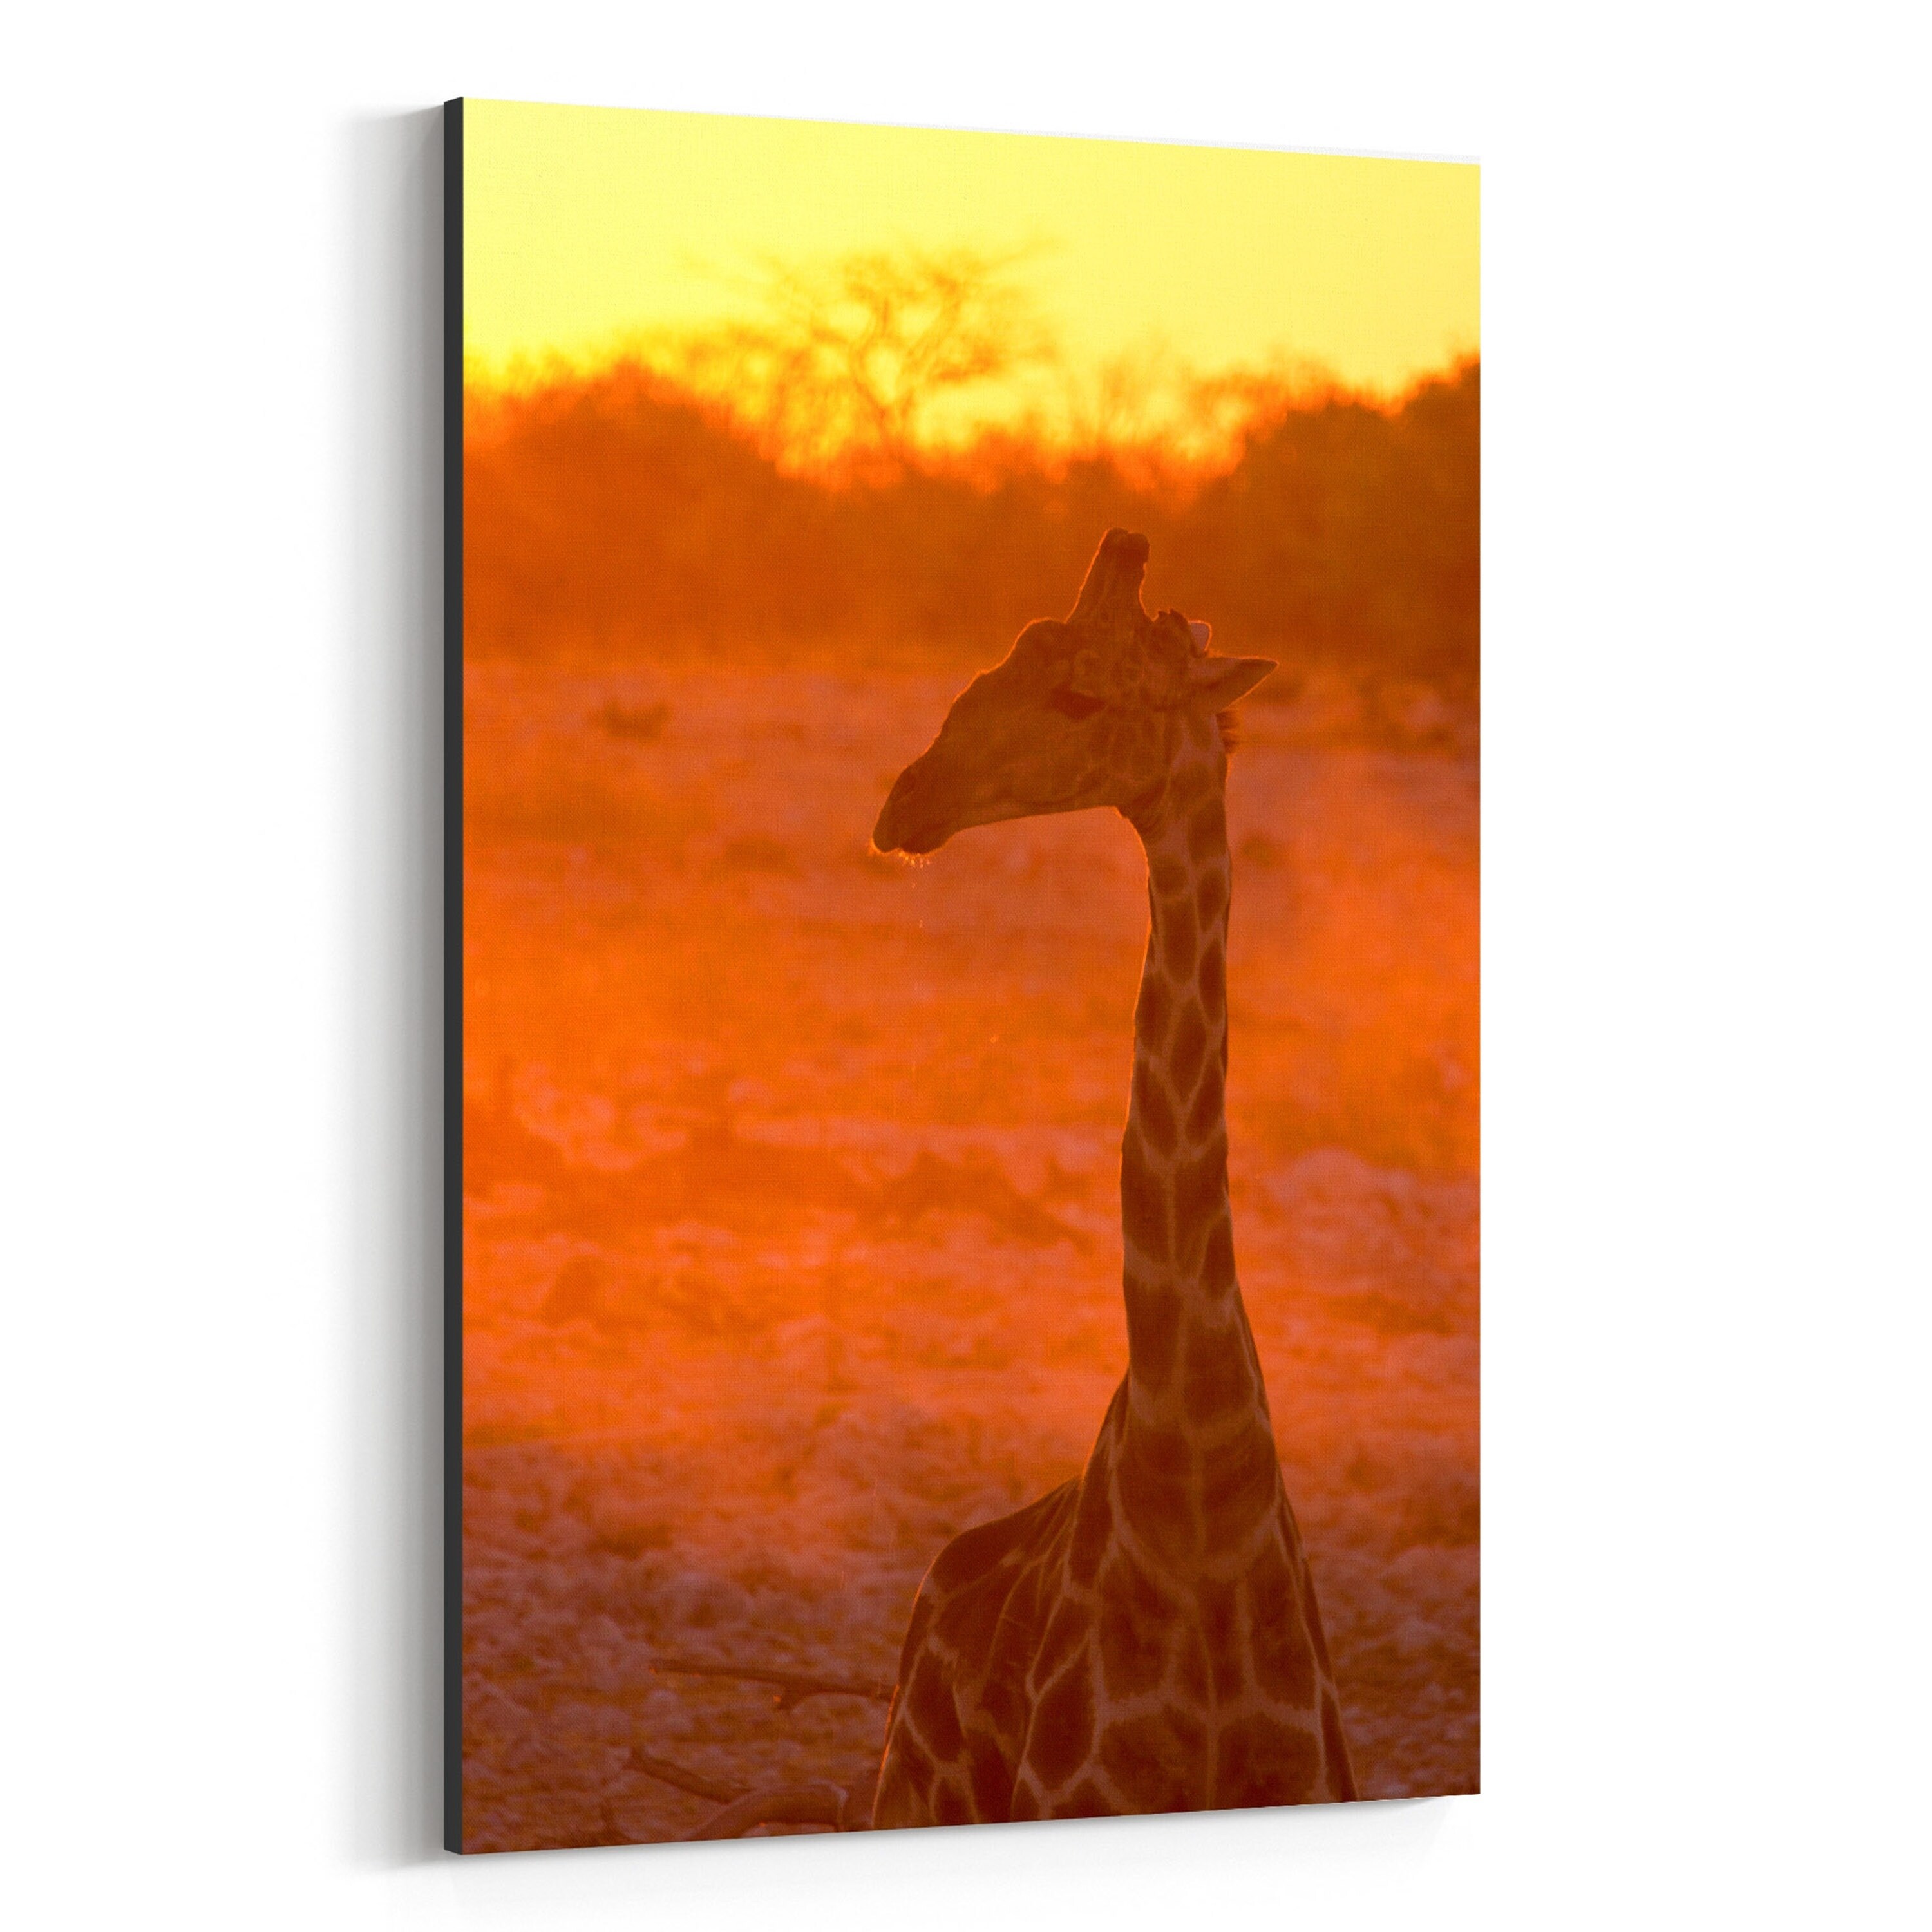 Shop Noir Gallery Namibia Africa Giraffe Wildlife Canvas Wall Art Print Overstock 27439887